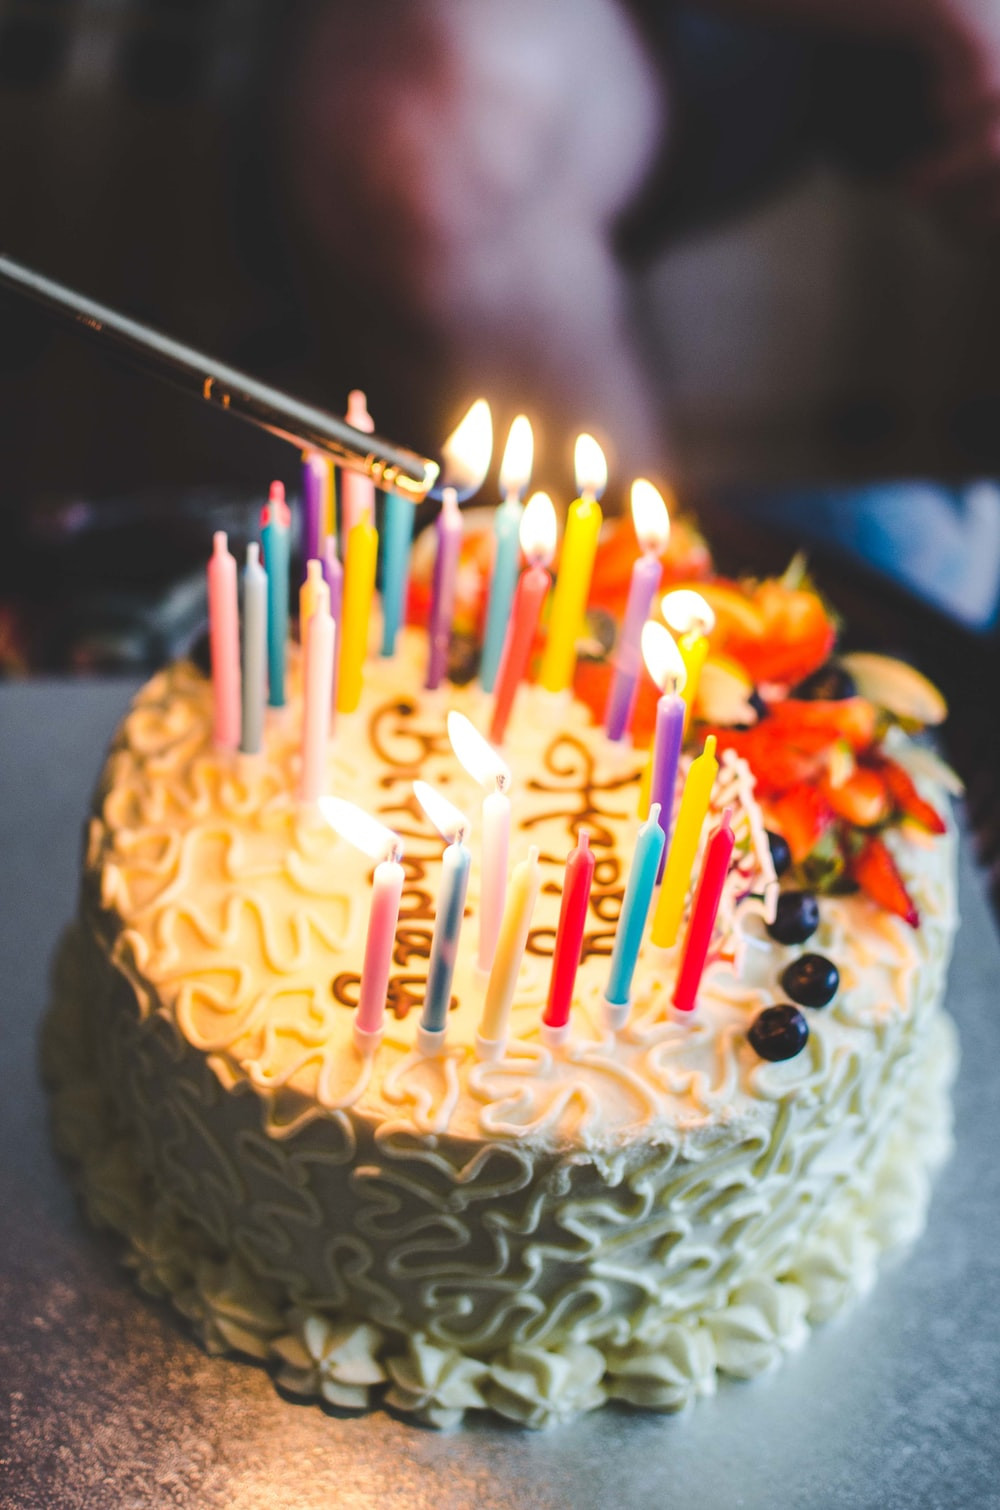 Free Pictures Of Birthday Cakes
 100 Birthday Cake